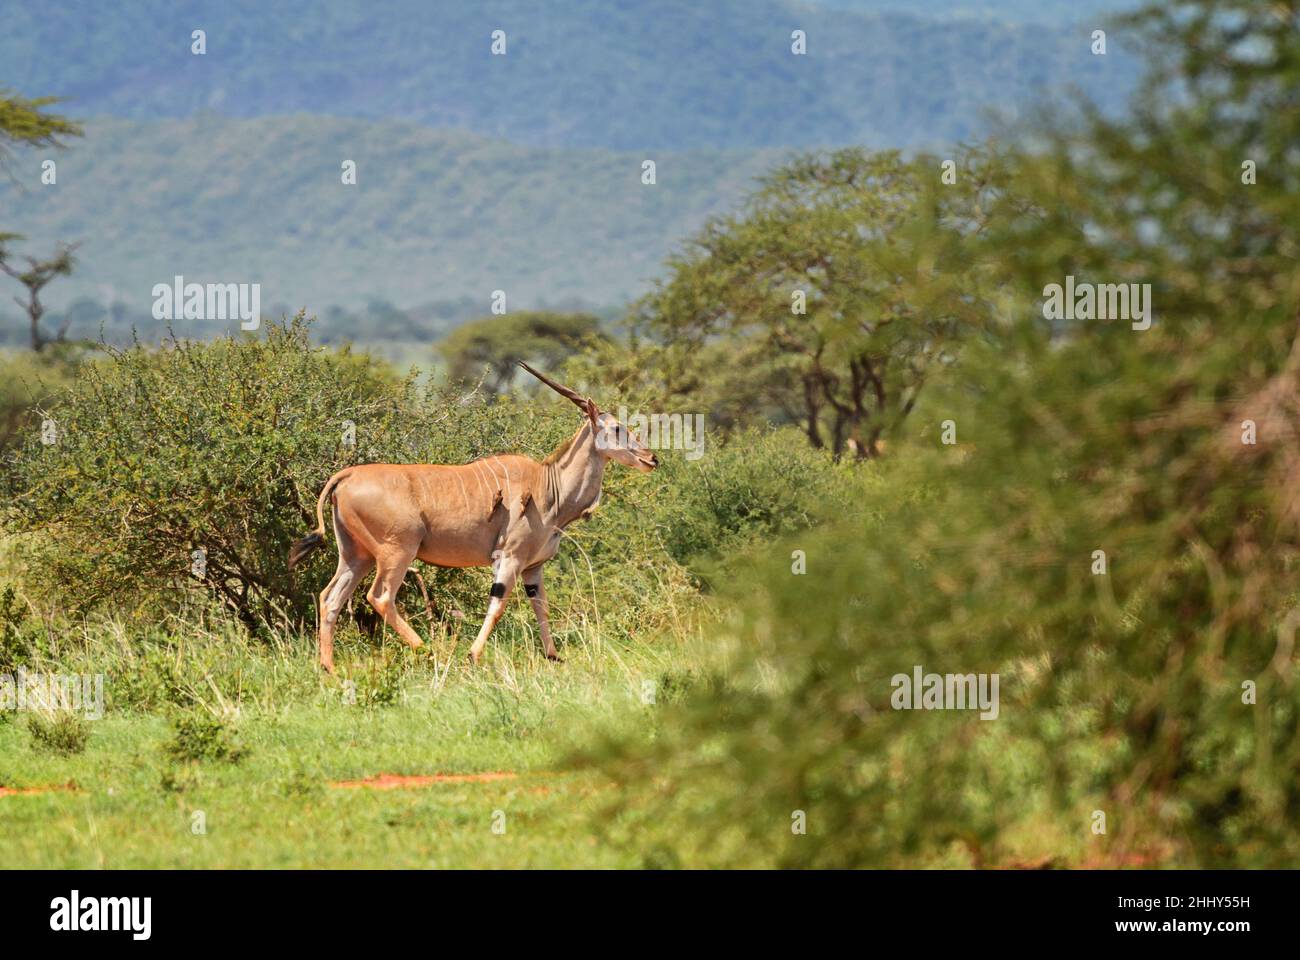 Common Eland - Taurotragus oryx, large rare antelope from African bushes and savannah, Tsavo East, Kenya. Stock Photo